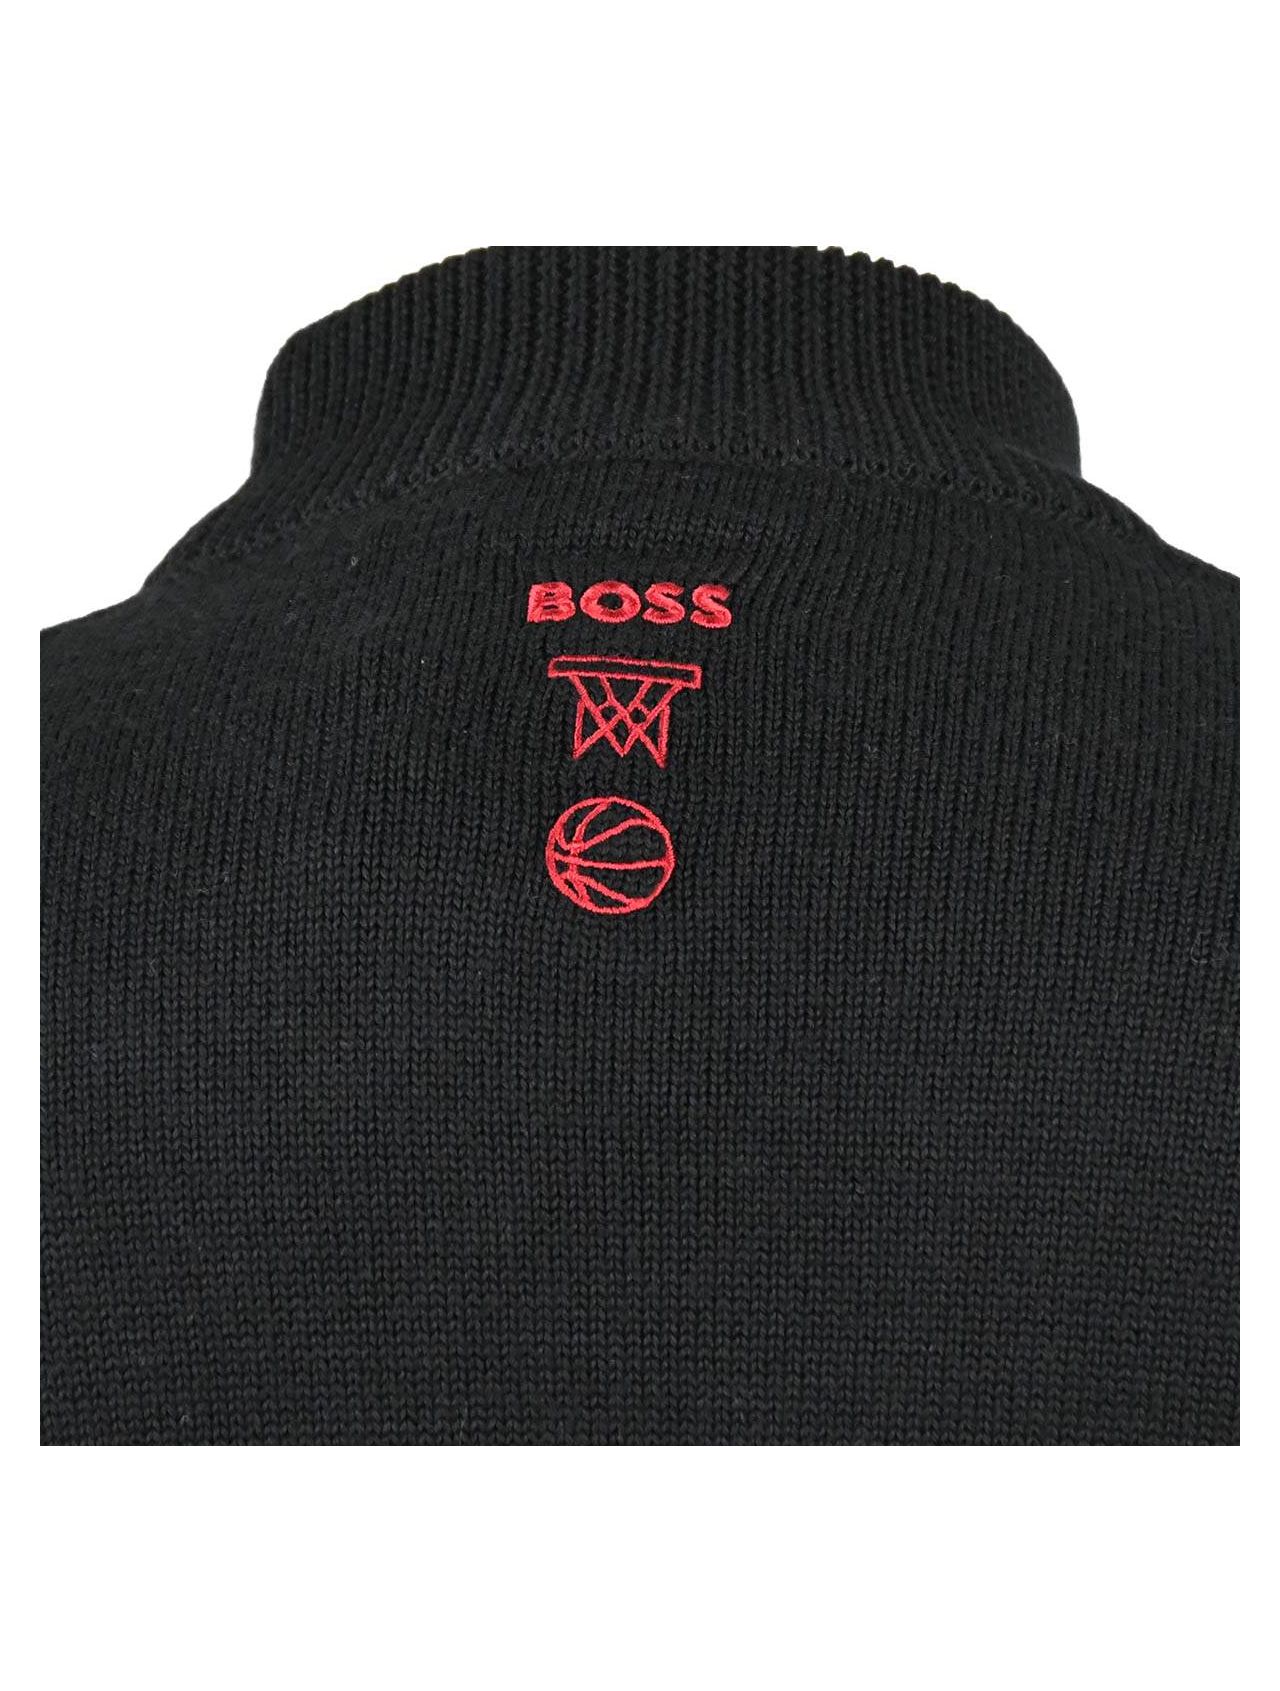 Boss x NBA Chicago Bulls Black Acrylic Virgin Wool Sweater | IsuiT